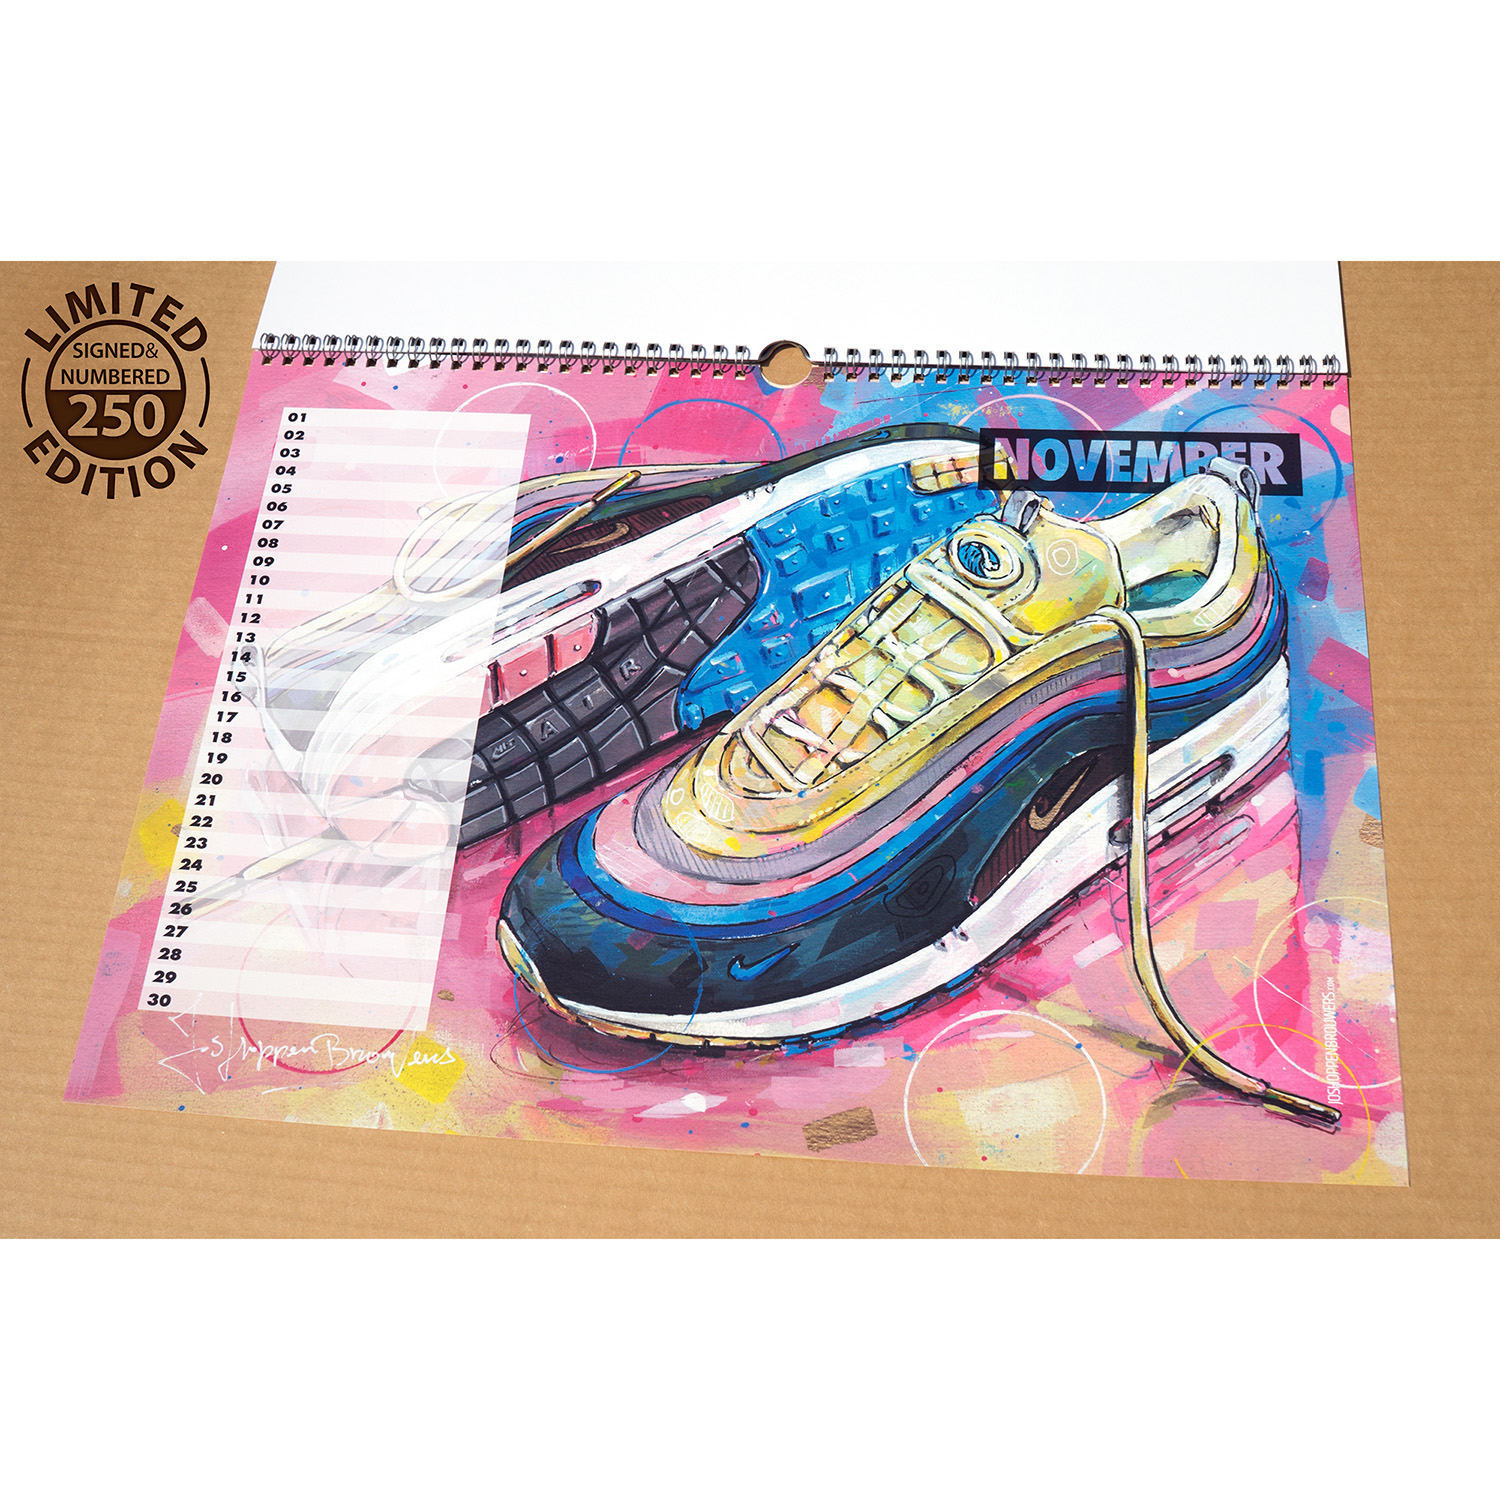 Nike sneaker art calendar (420x297mm) *limited edition Jos